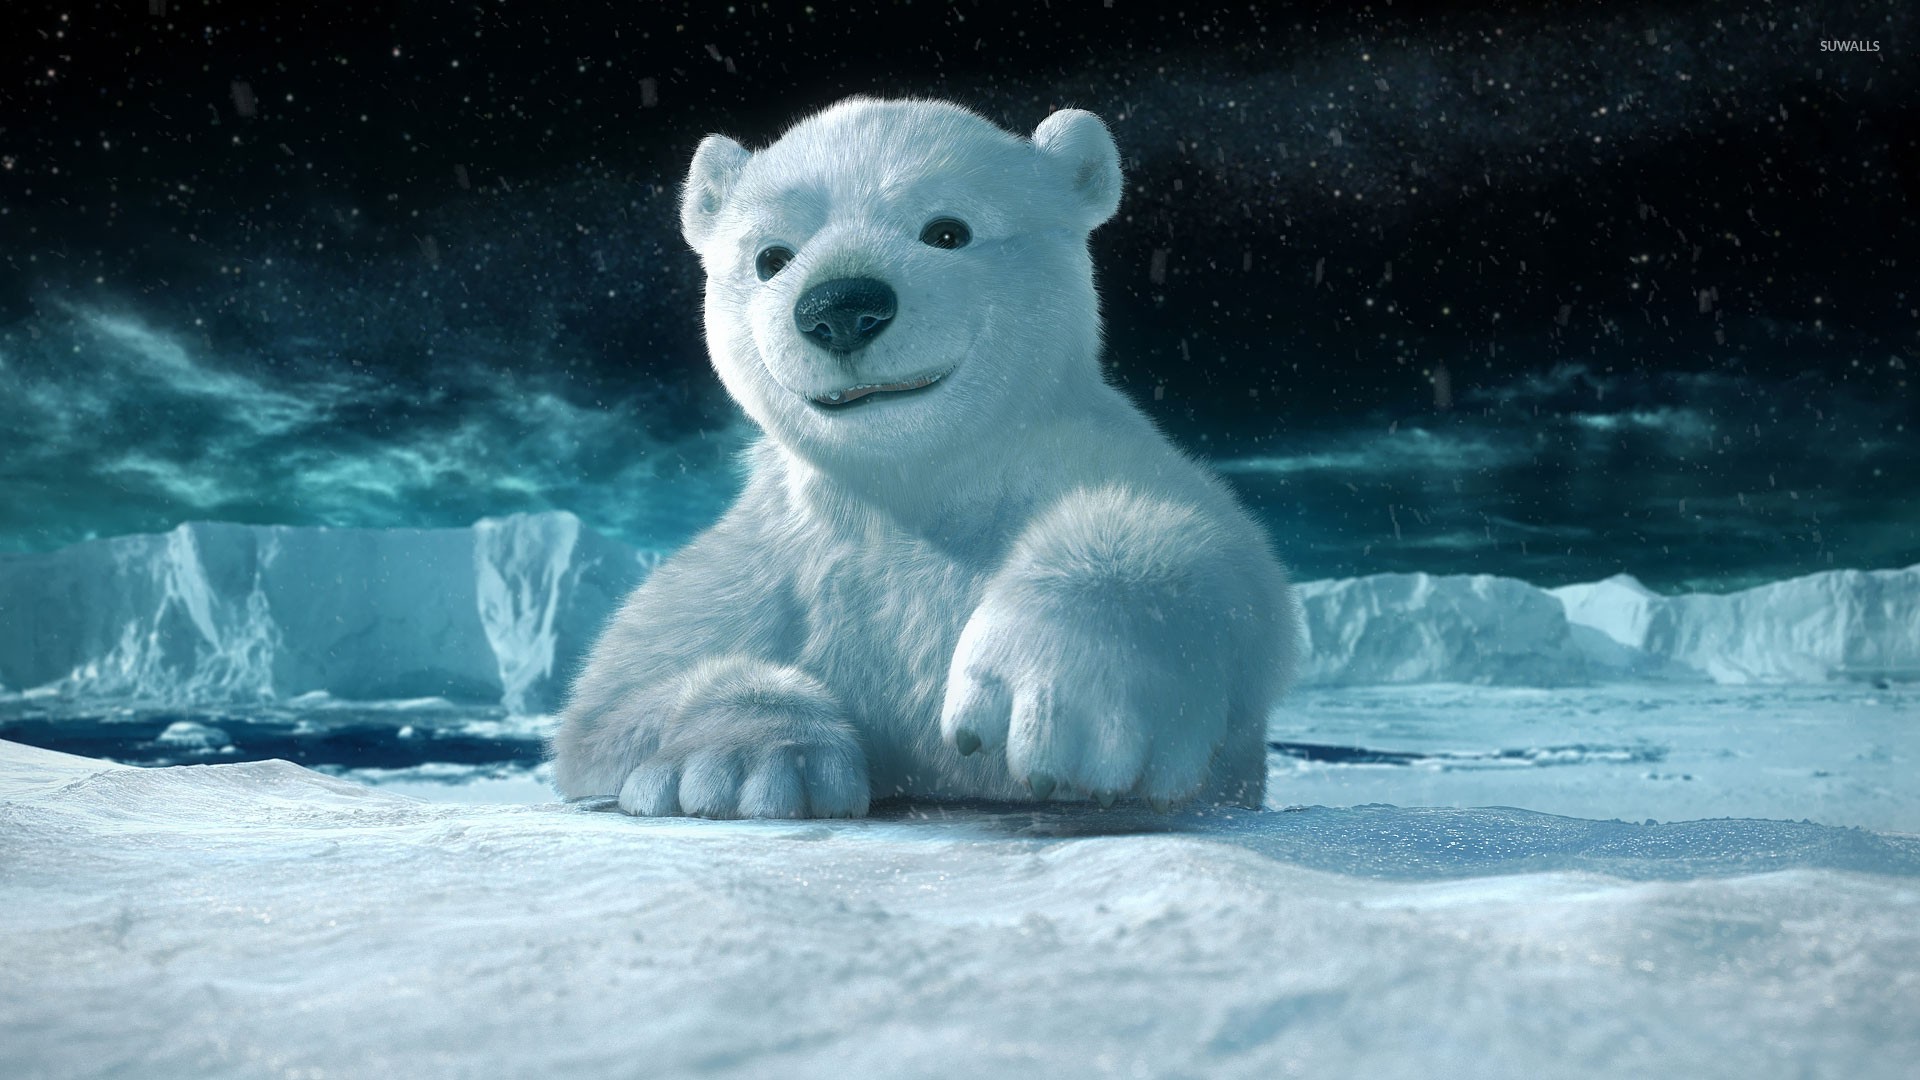 Polar bear cub wallpaper - Digital Art wallpapers - #21154